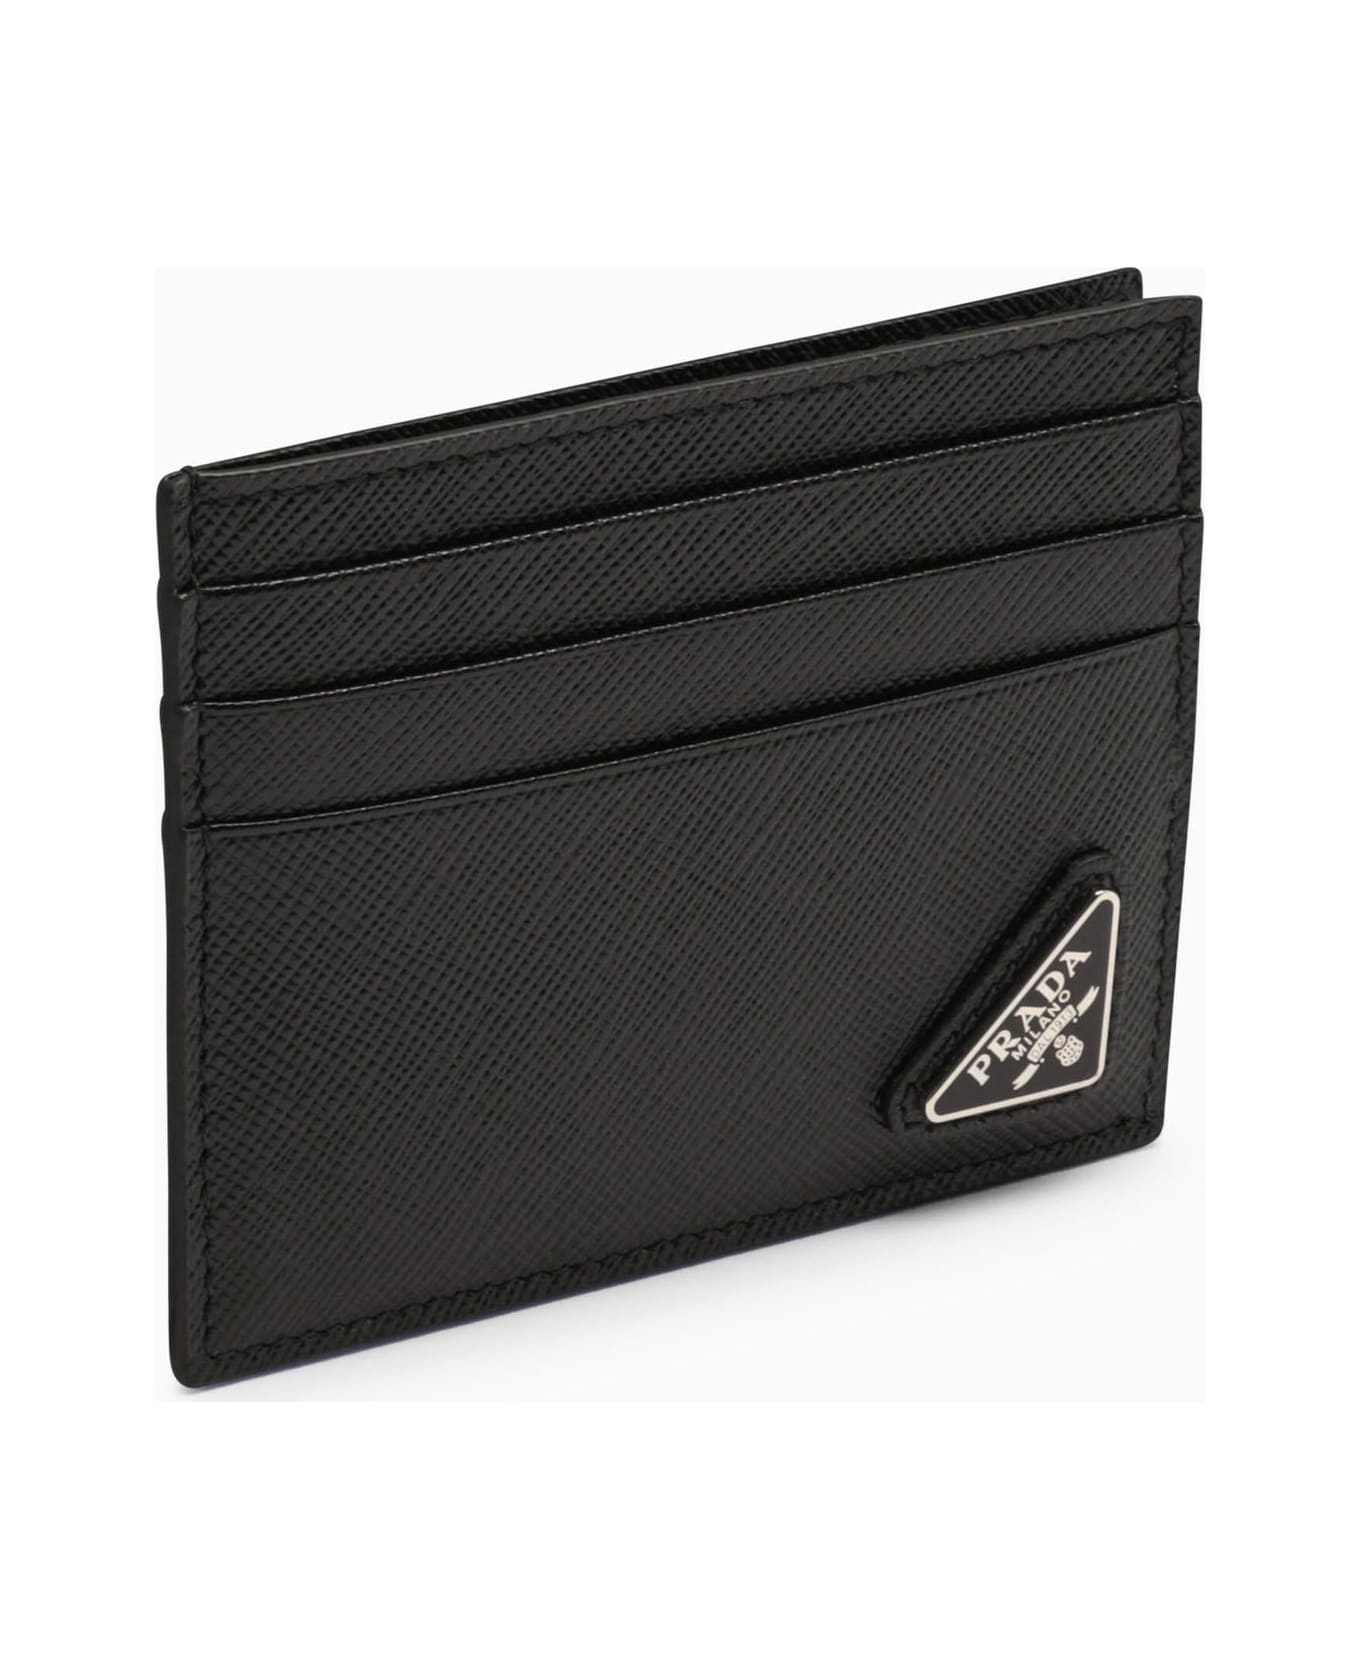 Prada Black Saffiano Leather Credit Card Holder - Nero